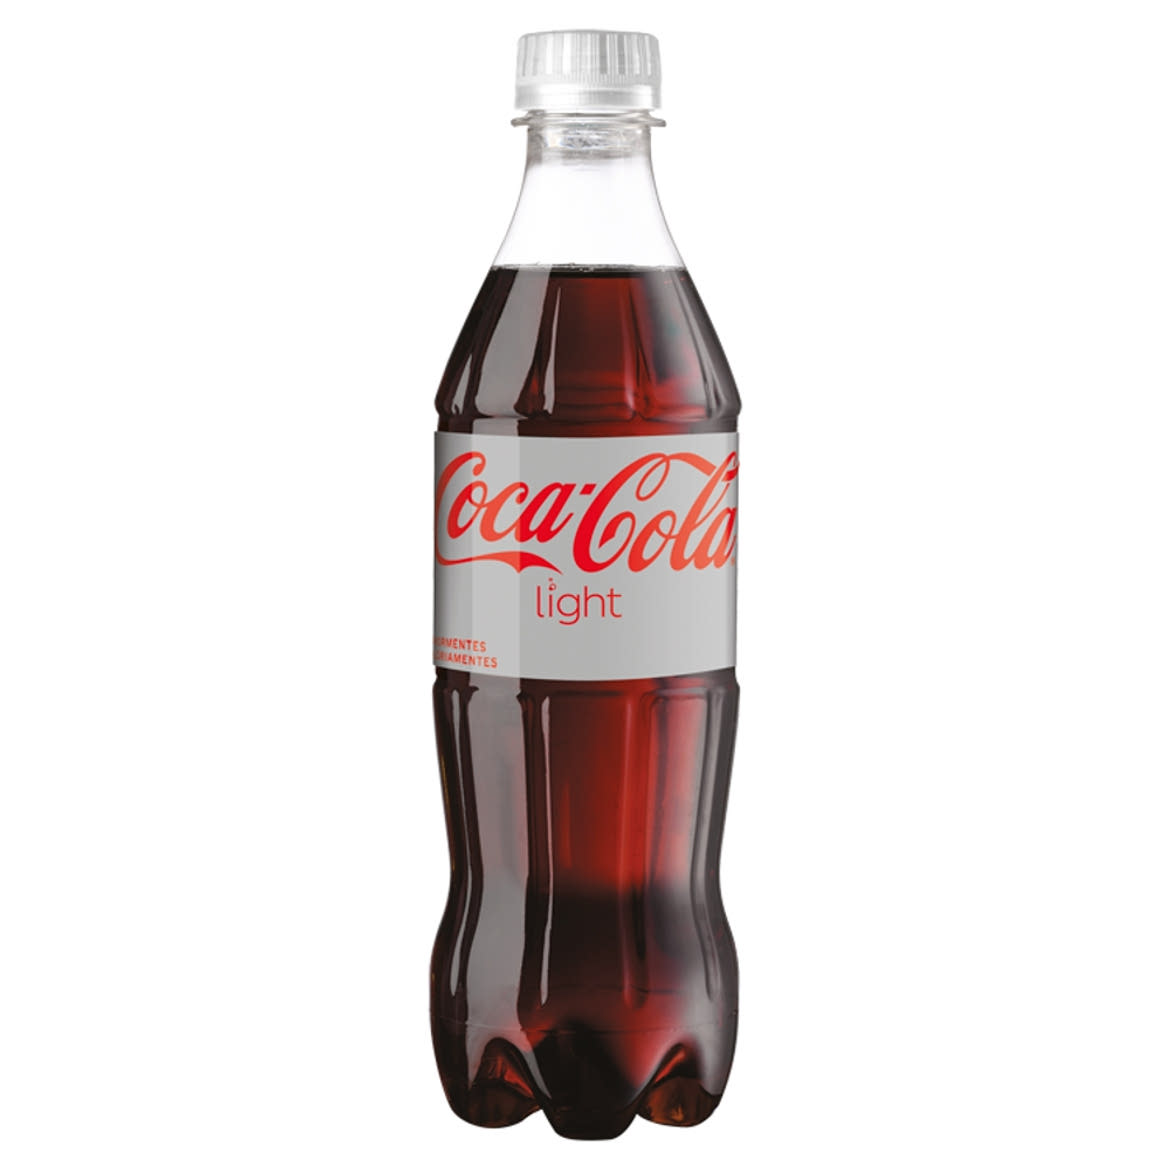 Coca-Cola Light colaÃ­zÅ± energiamentes szÃ©nsavas Ã¼dÃ­tÅ‘ital Ã©desÃ­tÅ‘szerekkel